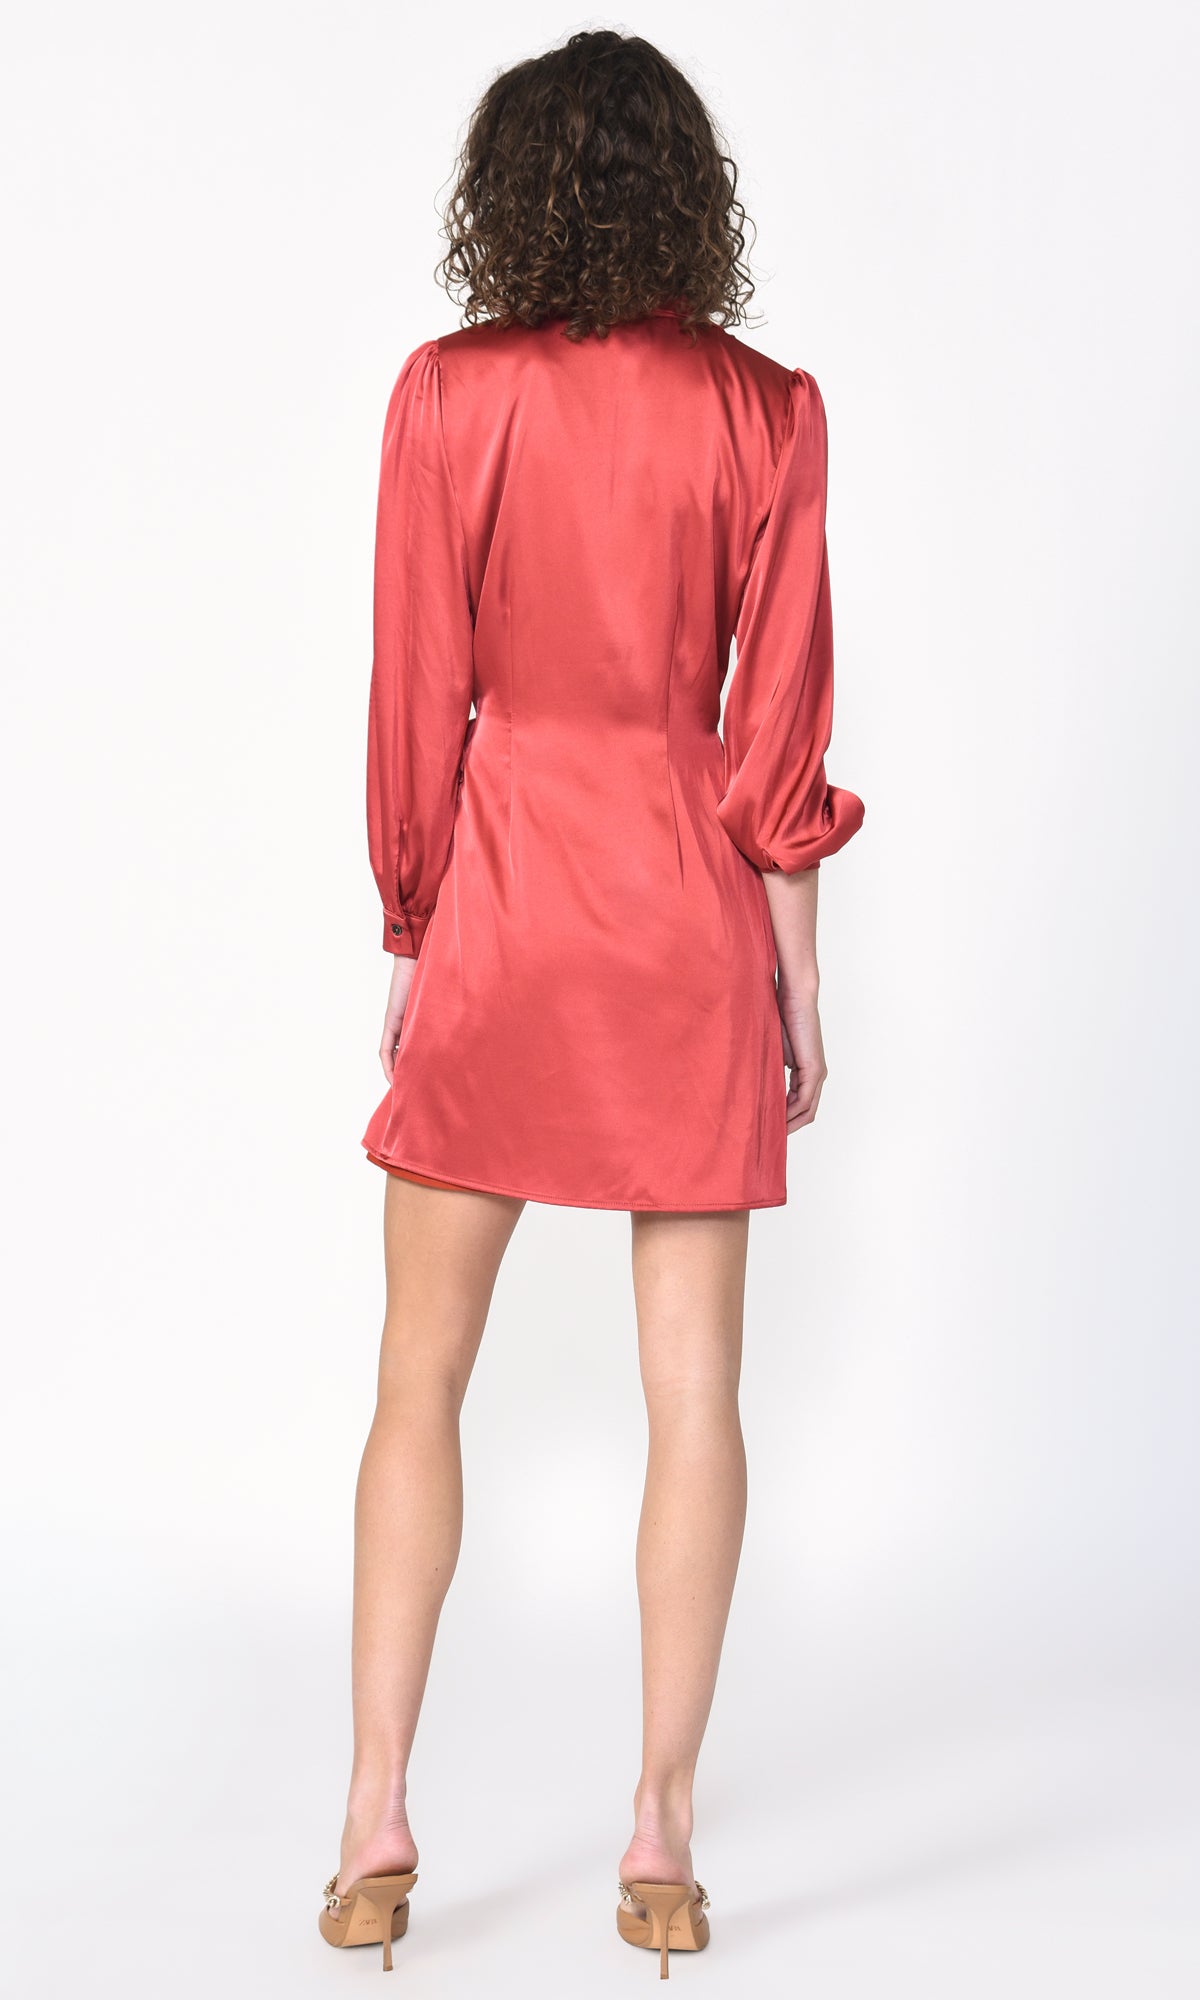 Short Pink Dress - Rental 